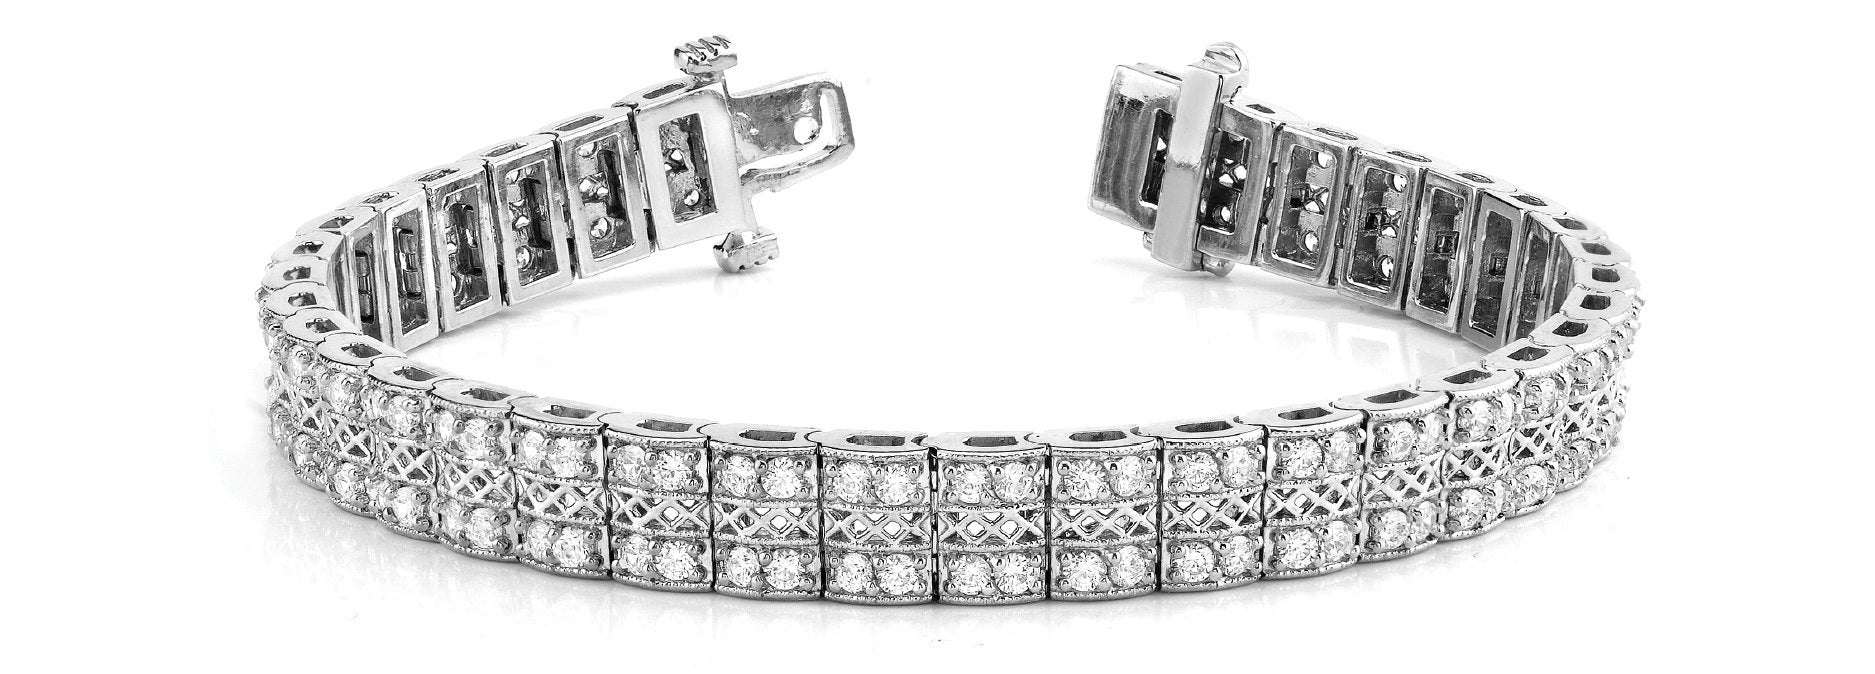 Fancy Diamond Bracelet Ladies 3.61ct tw - 14kt White Gold